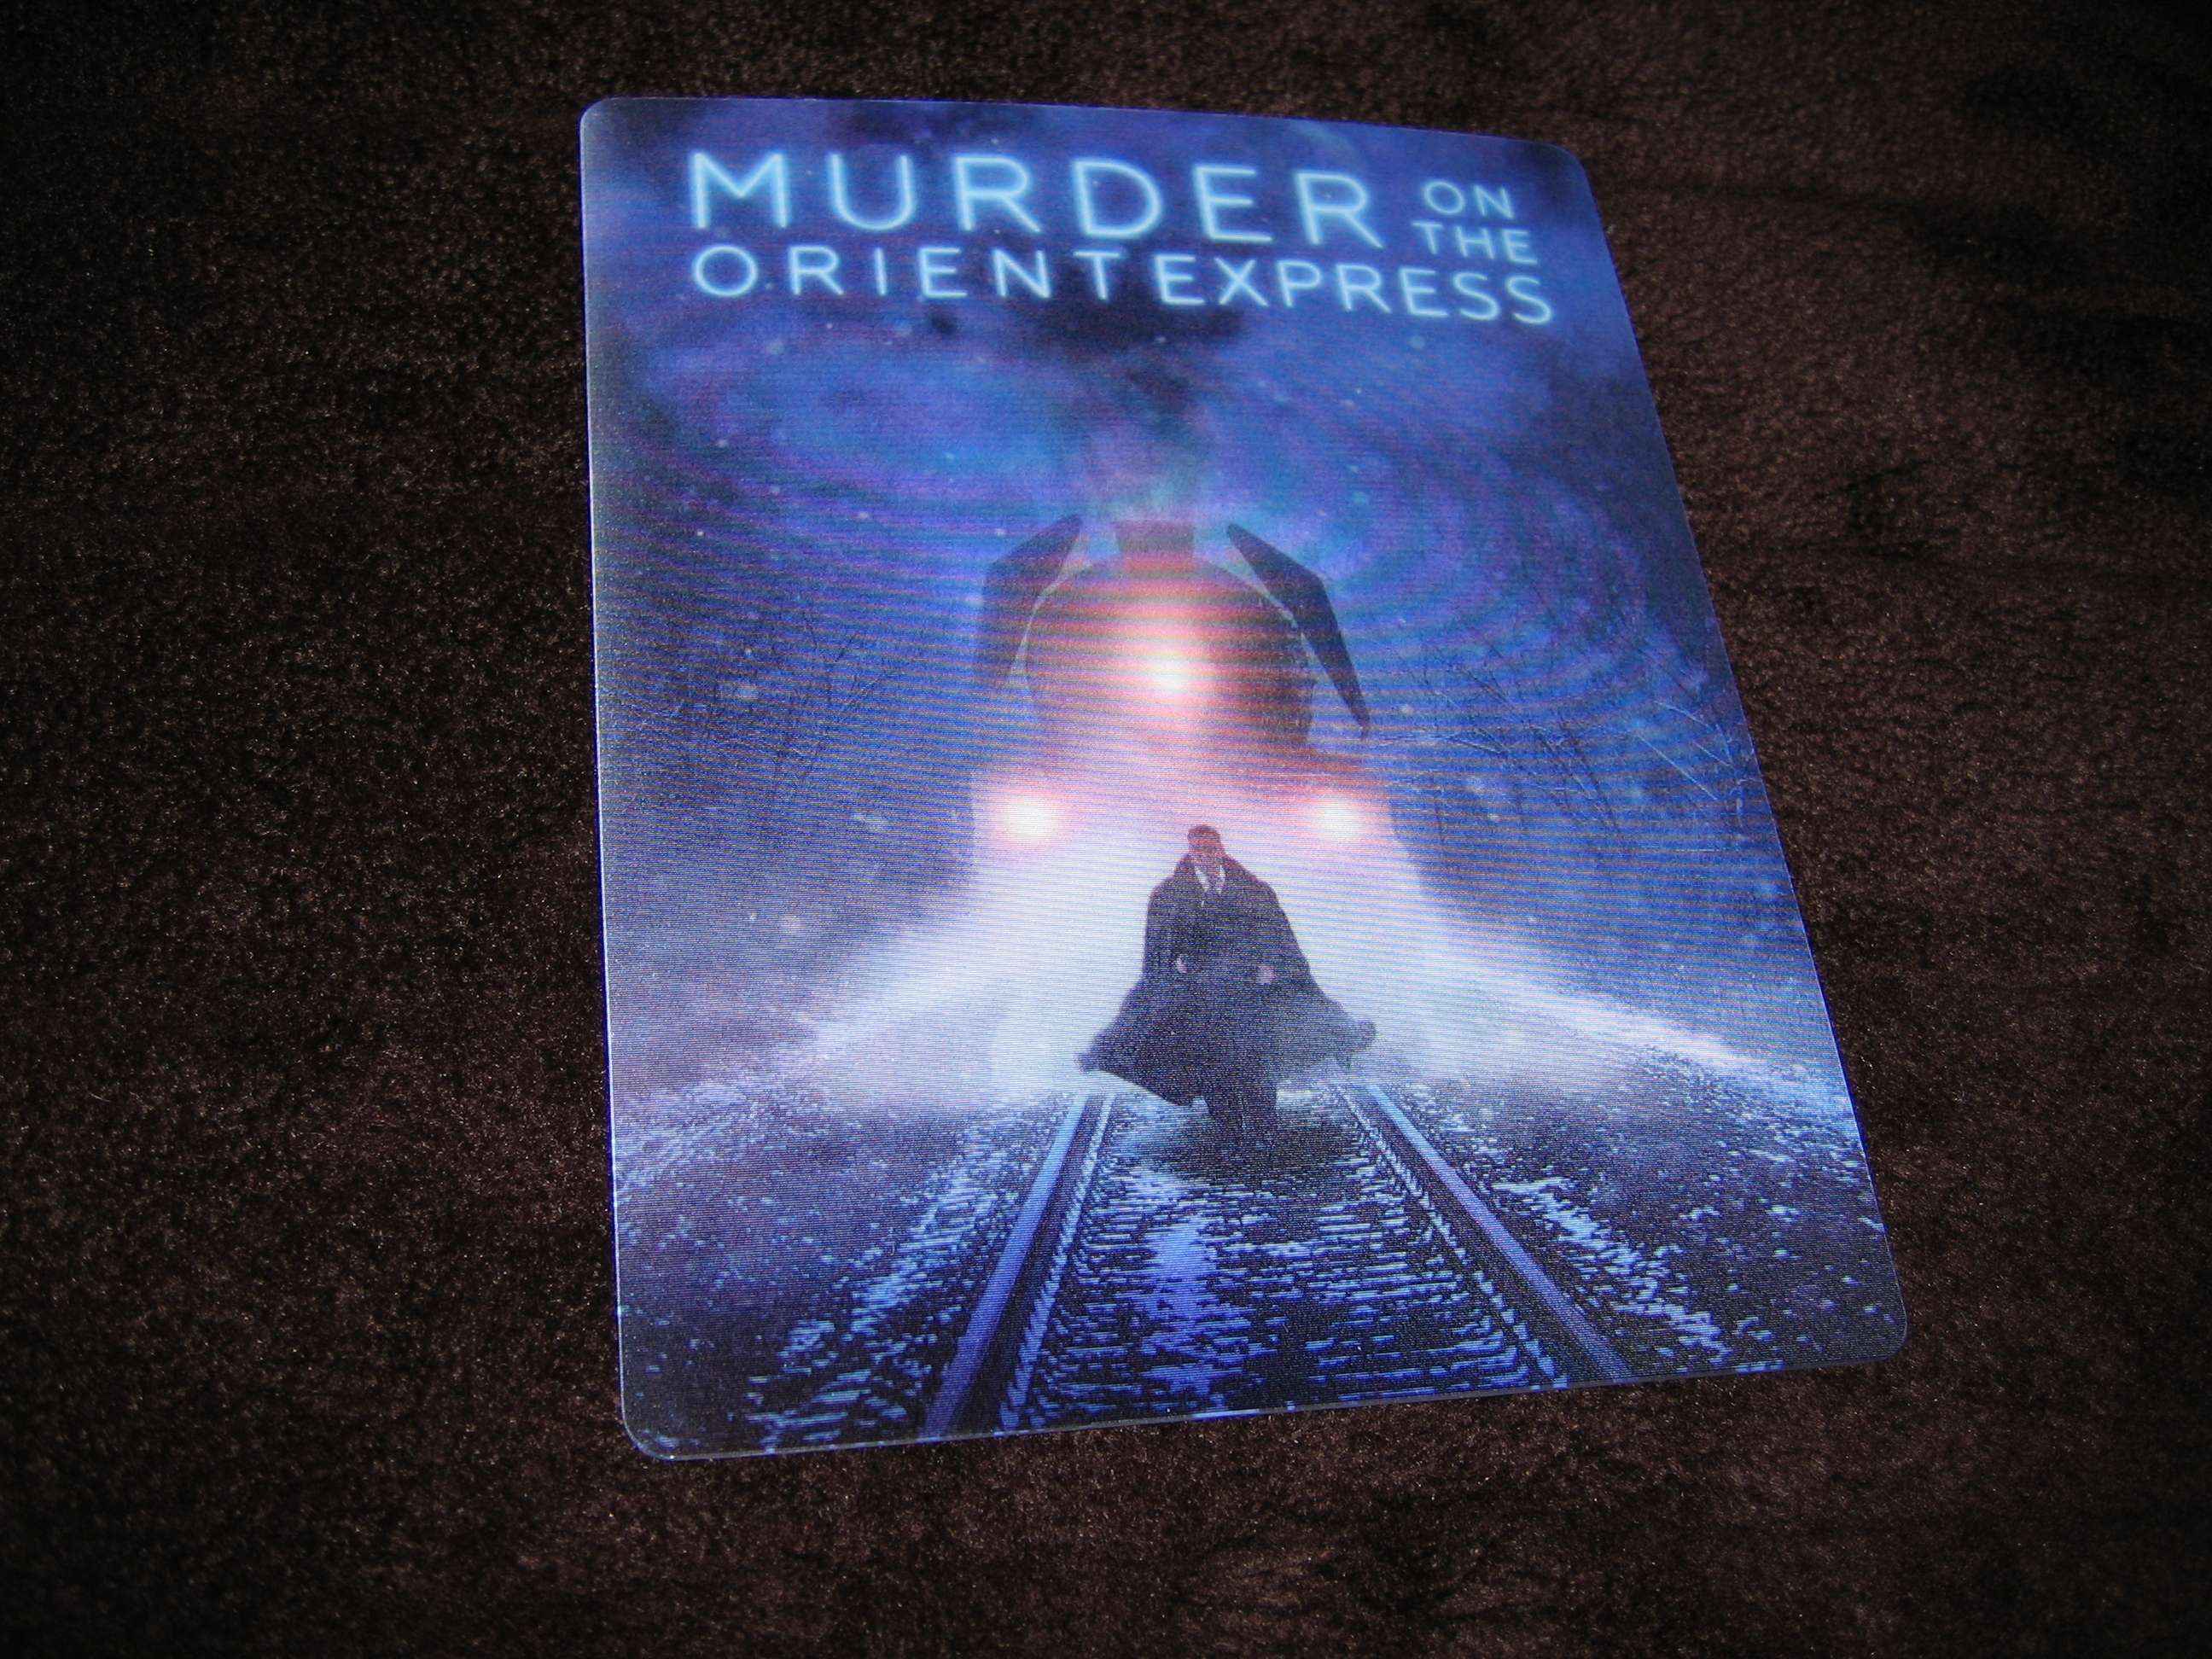 Murder_on_the_orient_express (CZ)_f.JPG